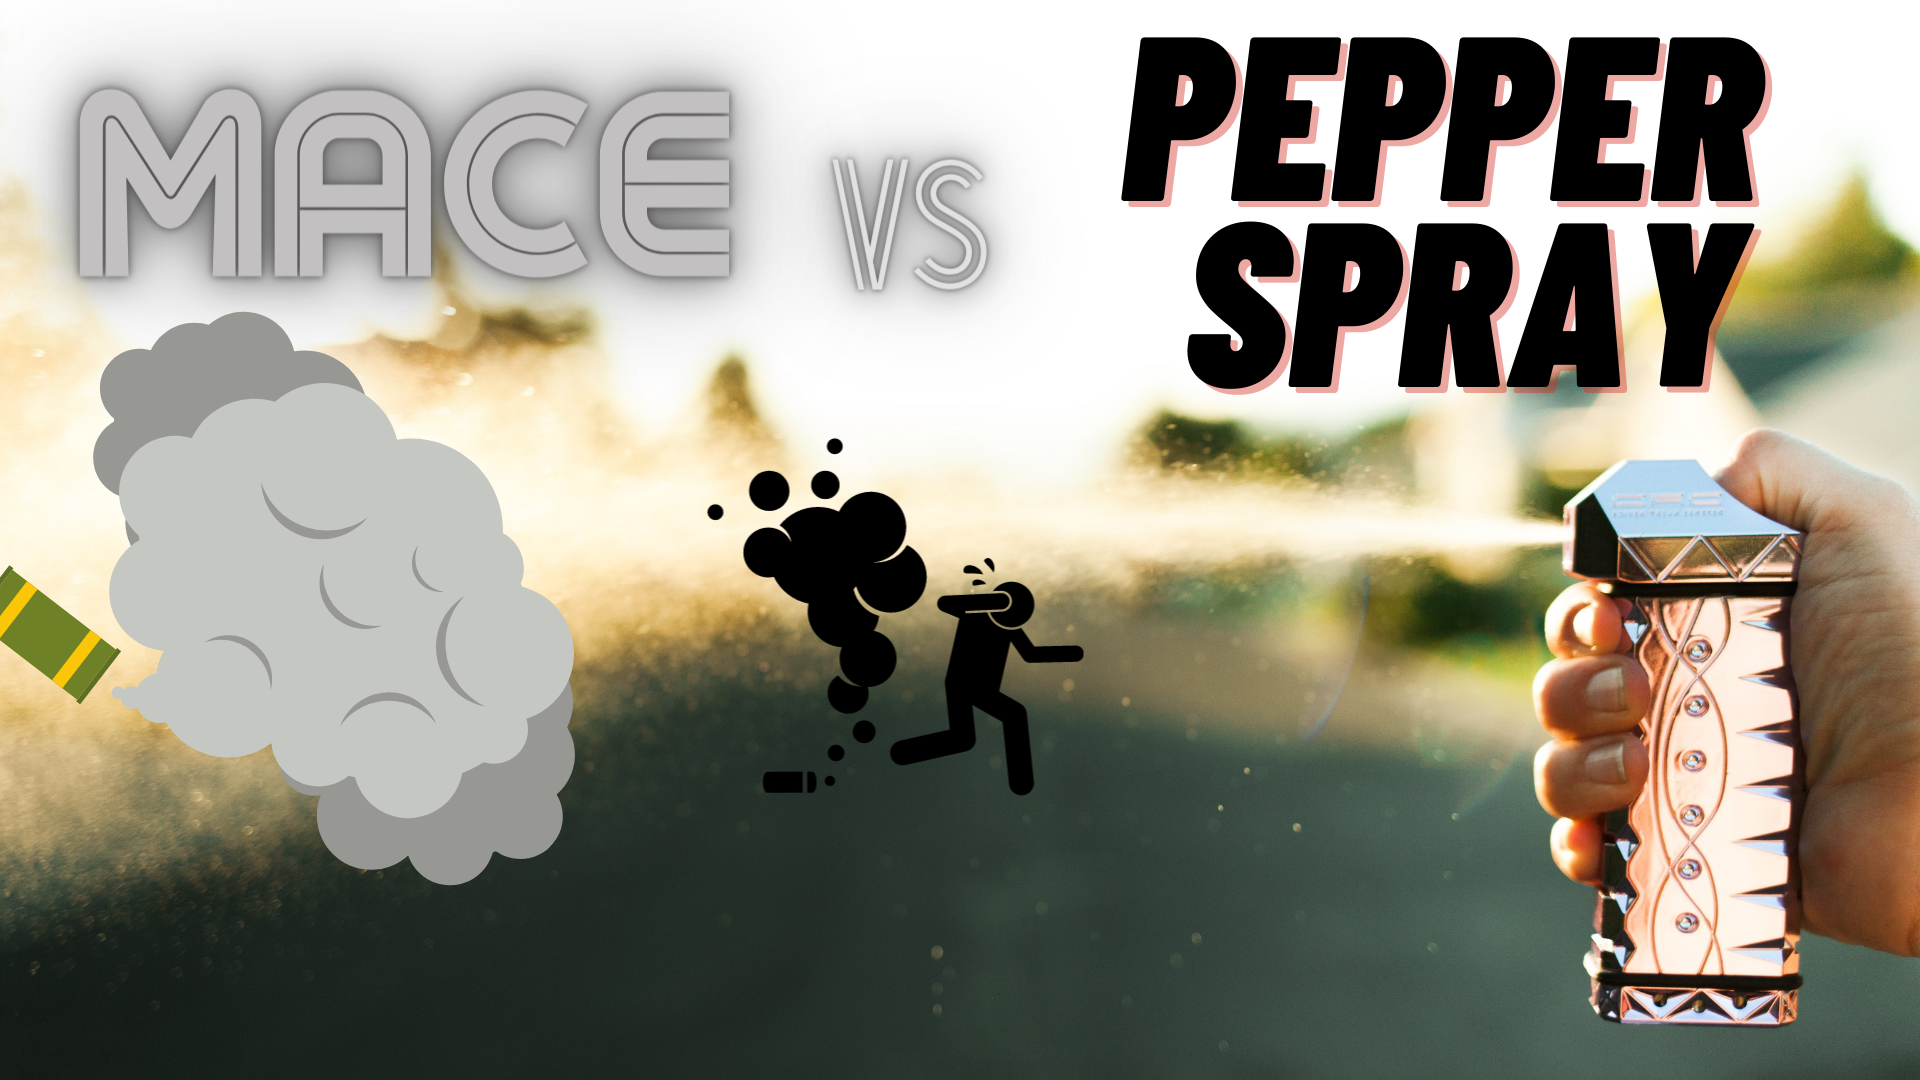 Pepper Spray 